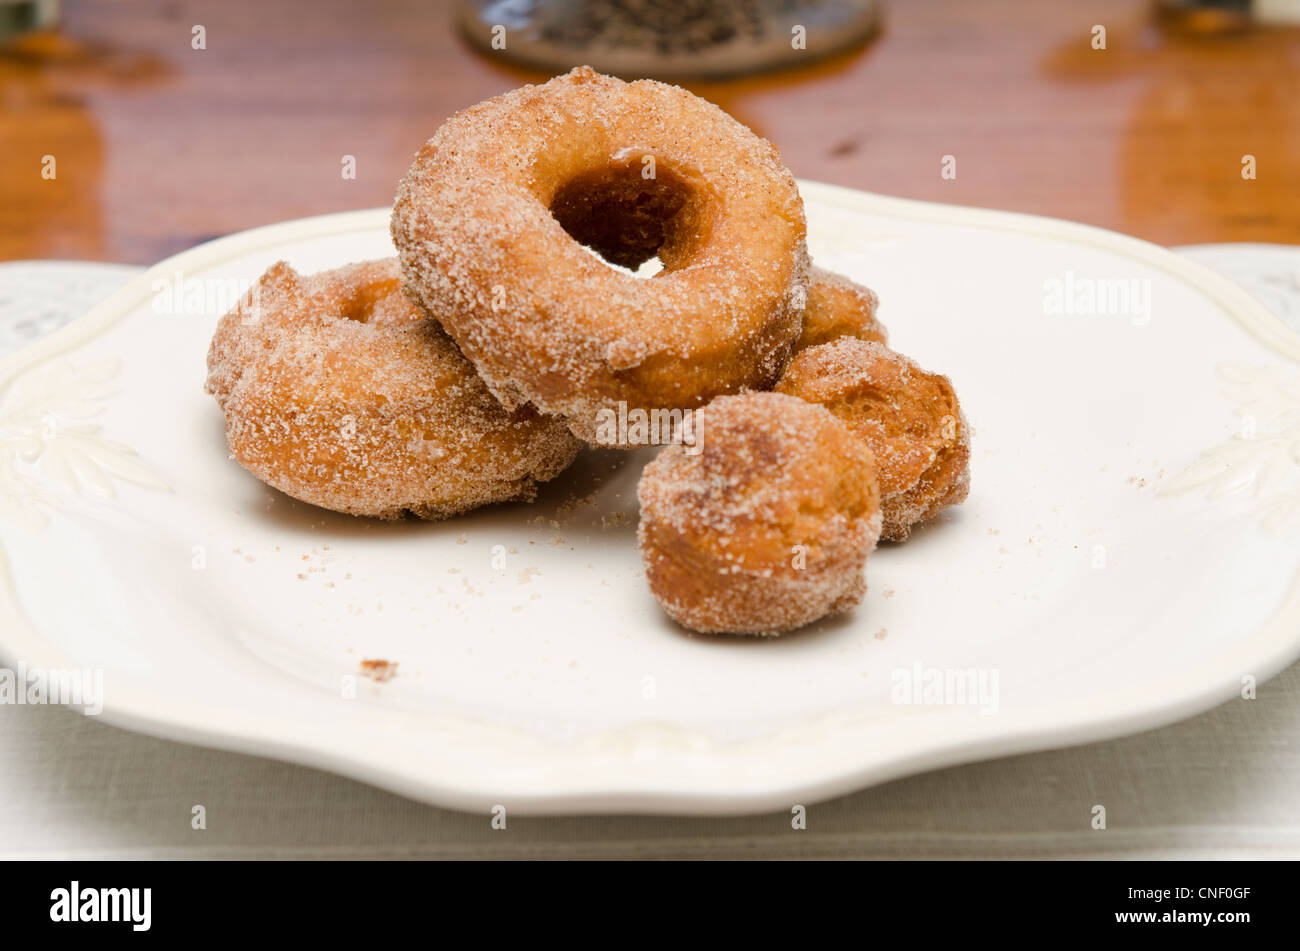 Homemade doughnuts on a white plate. Stock Photo